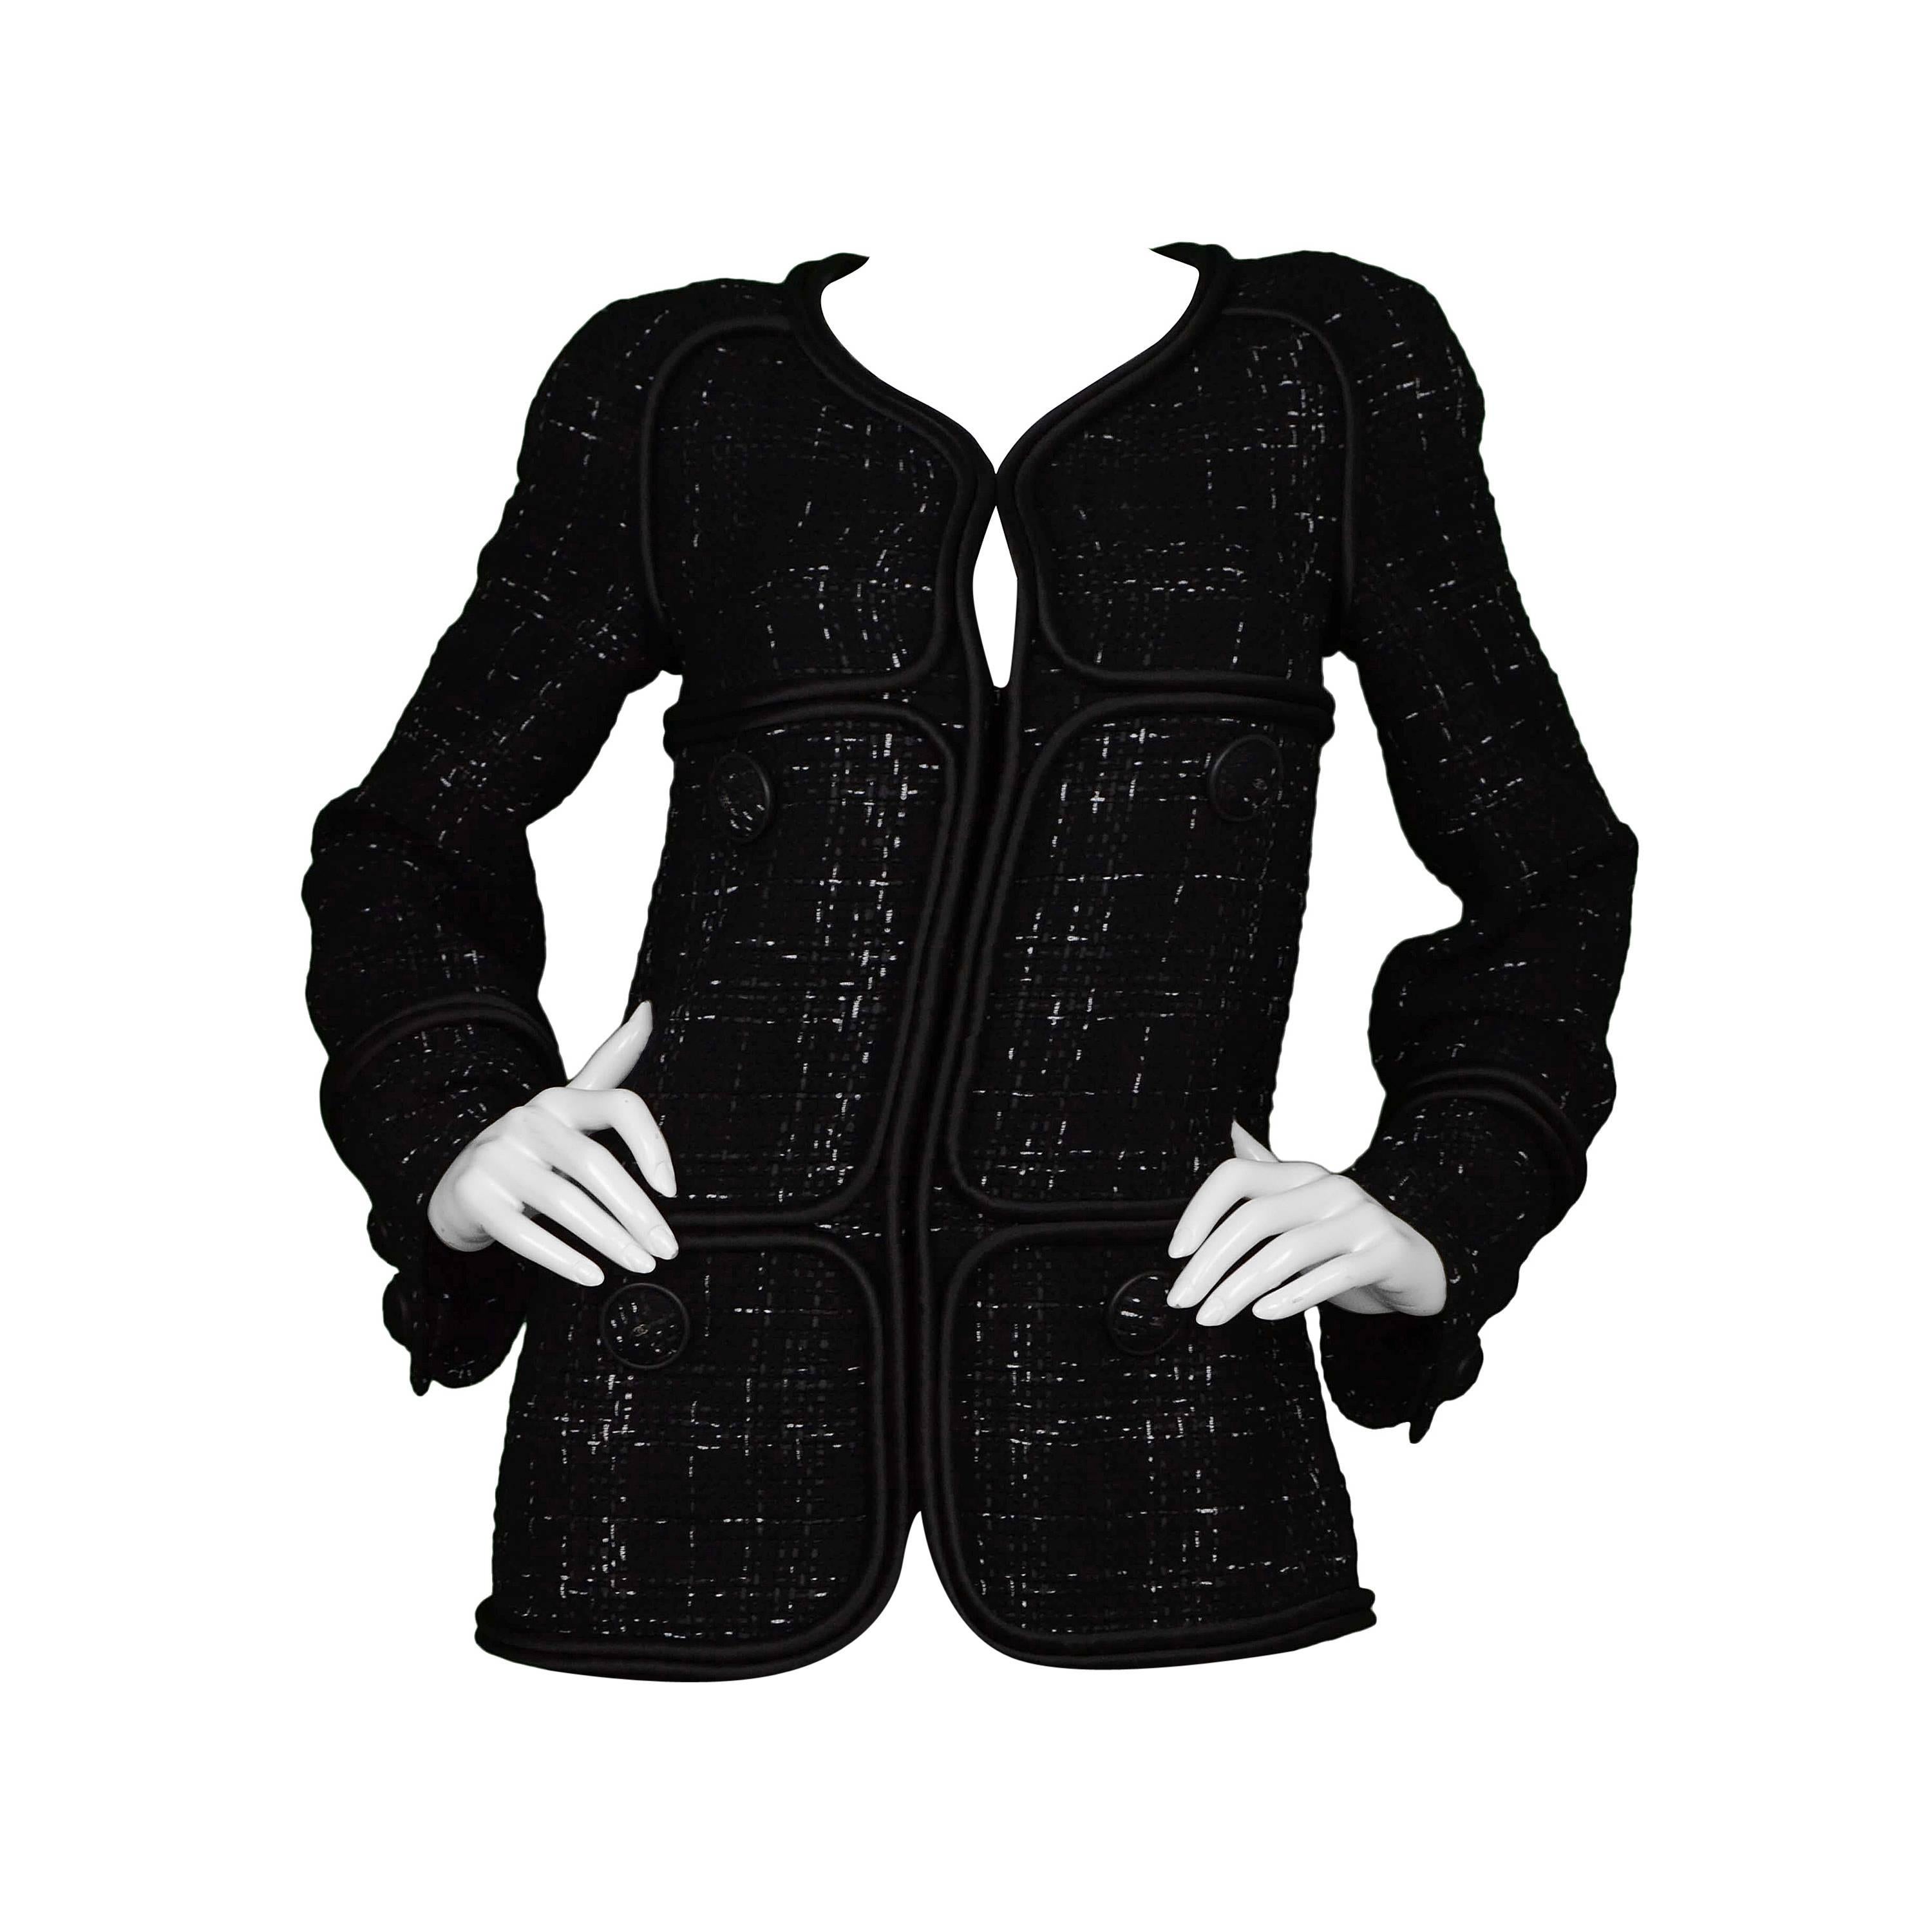 Chanel 2015 Black/White Boucle Jacket w/ Satin Piping sz 36